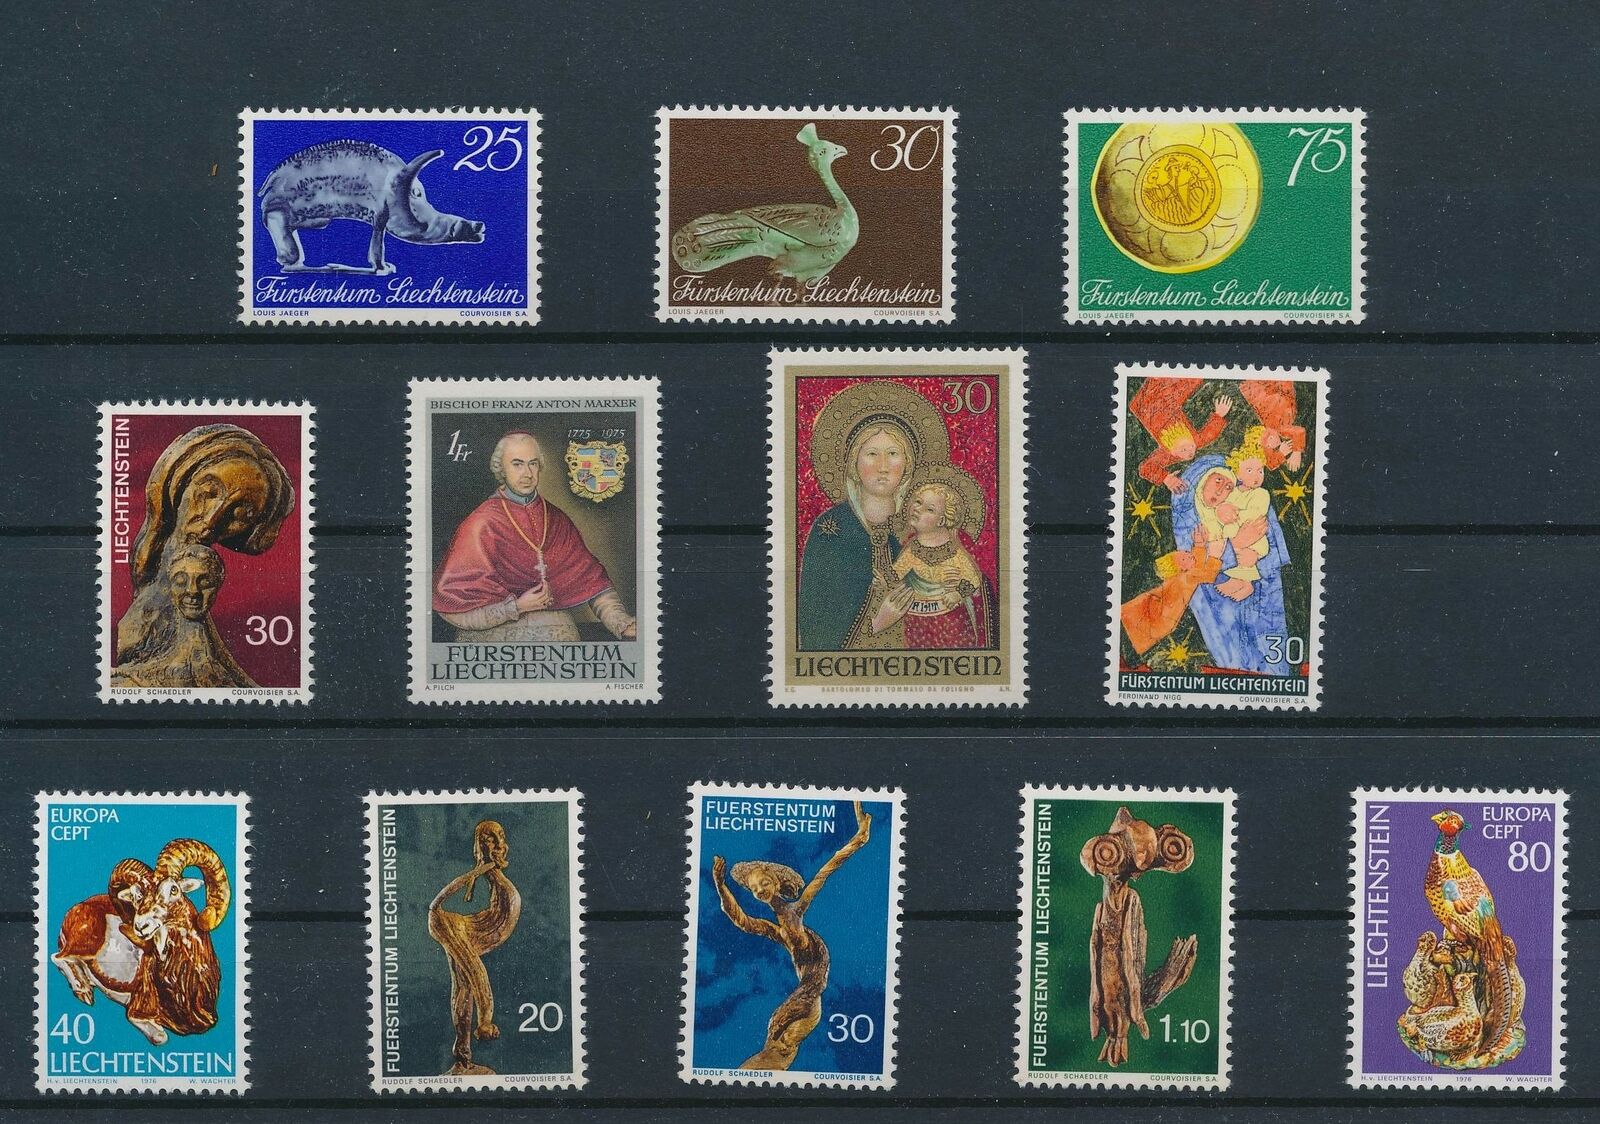 LO42636 Liechtenstein mixed thematics nice lot of good stamps MNH